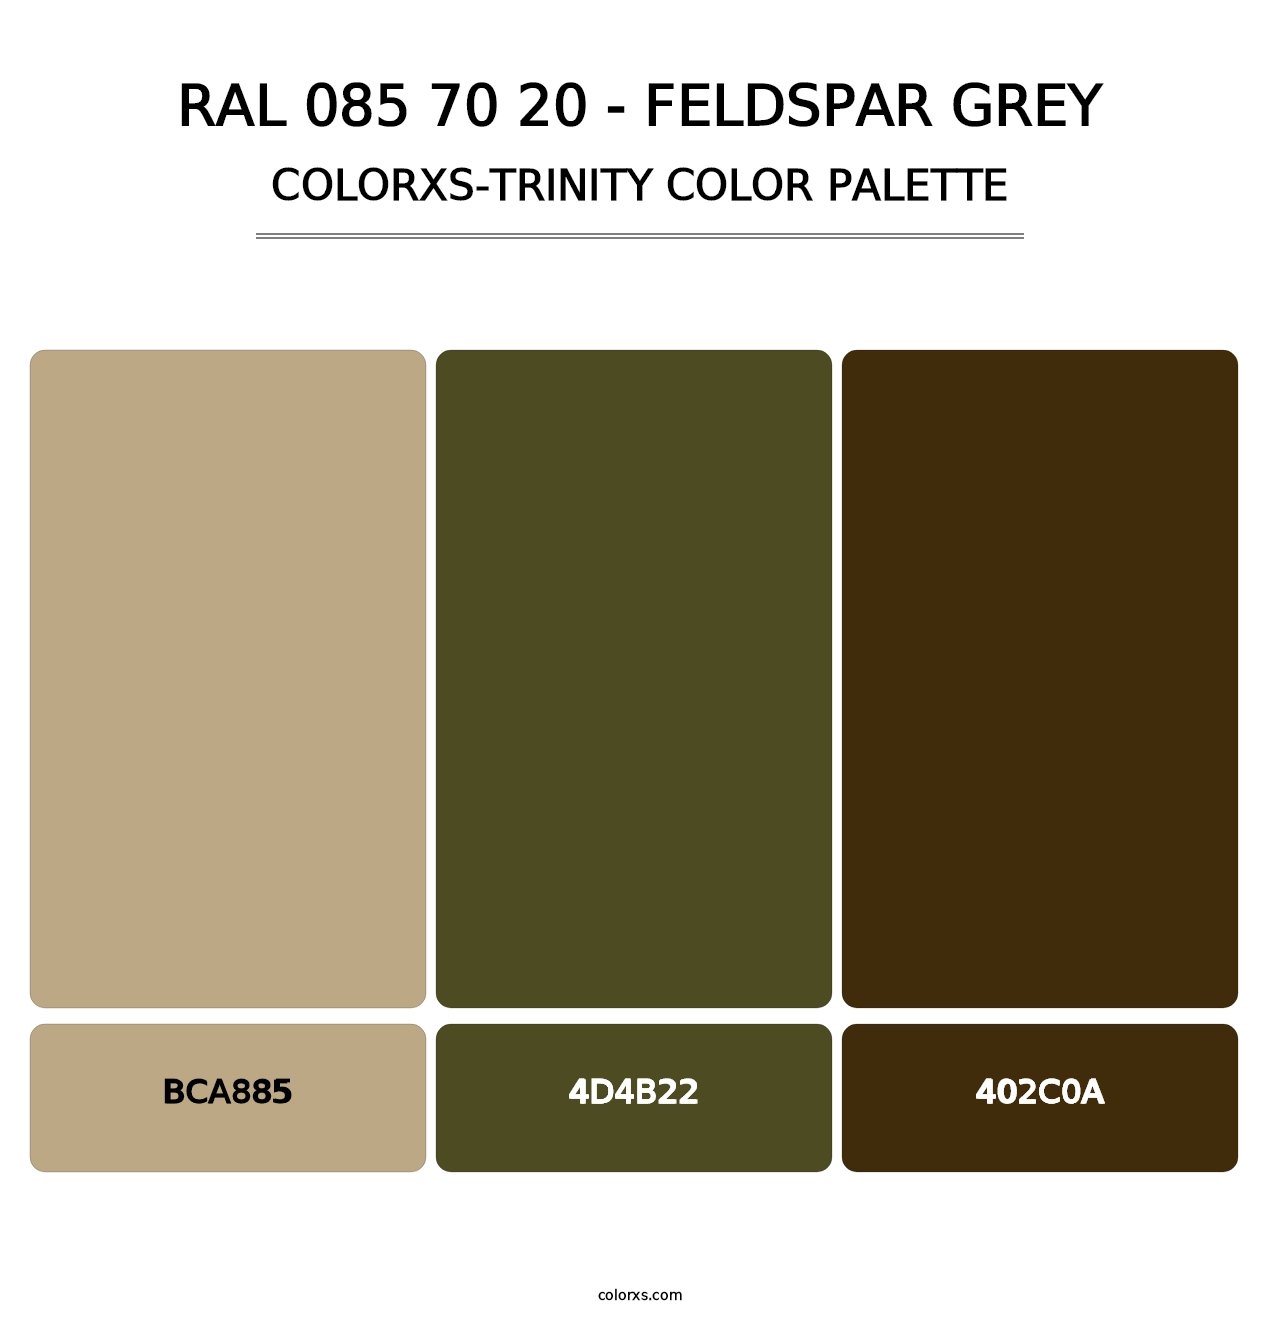 RAL 085 70 20 - Feldspar Grey - Colorxs Trinity Palette